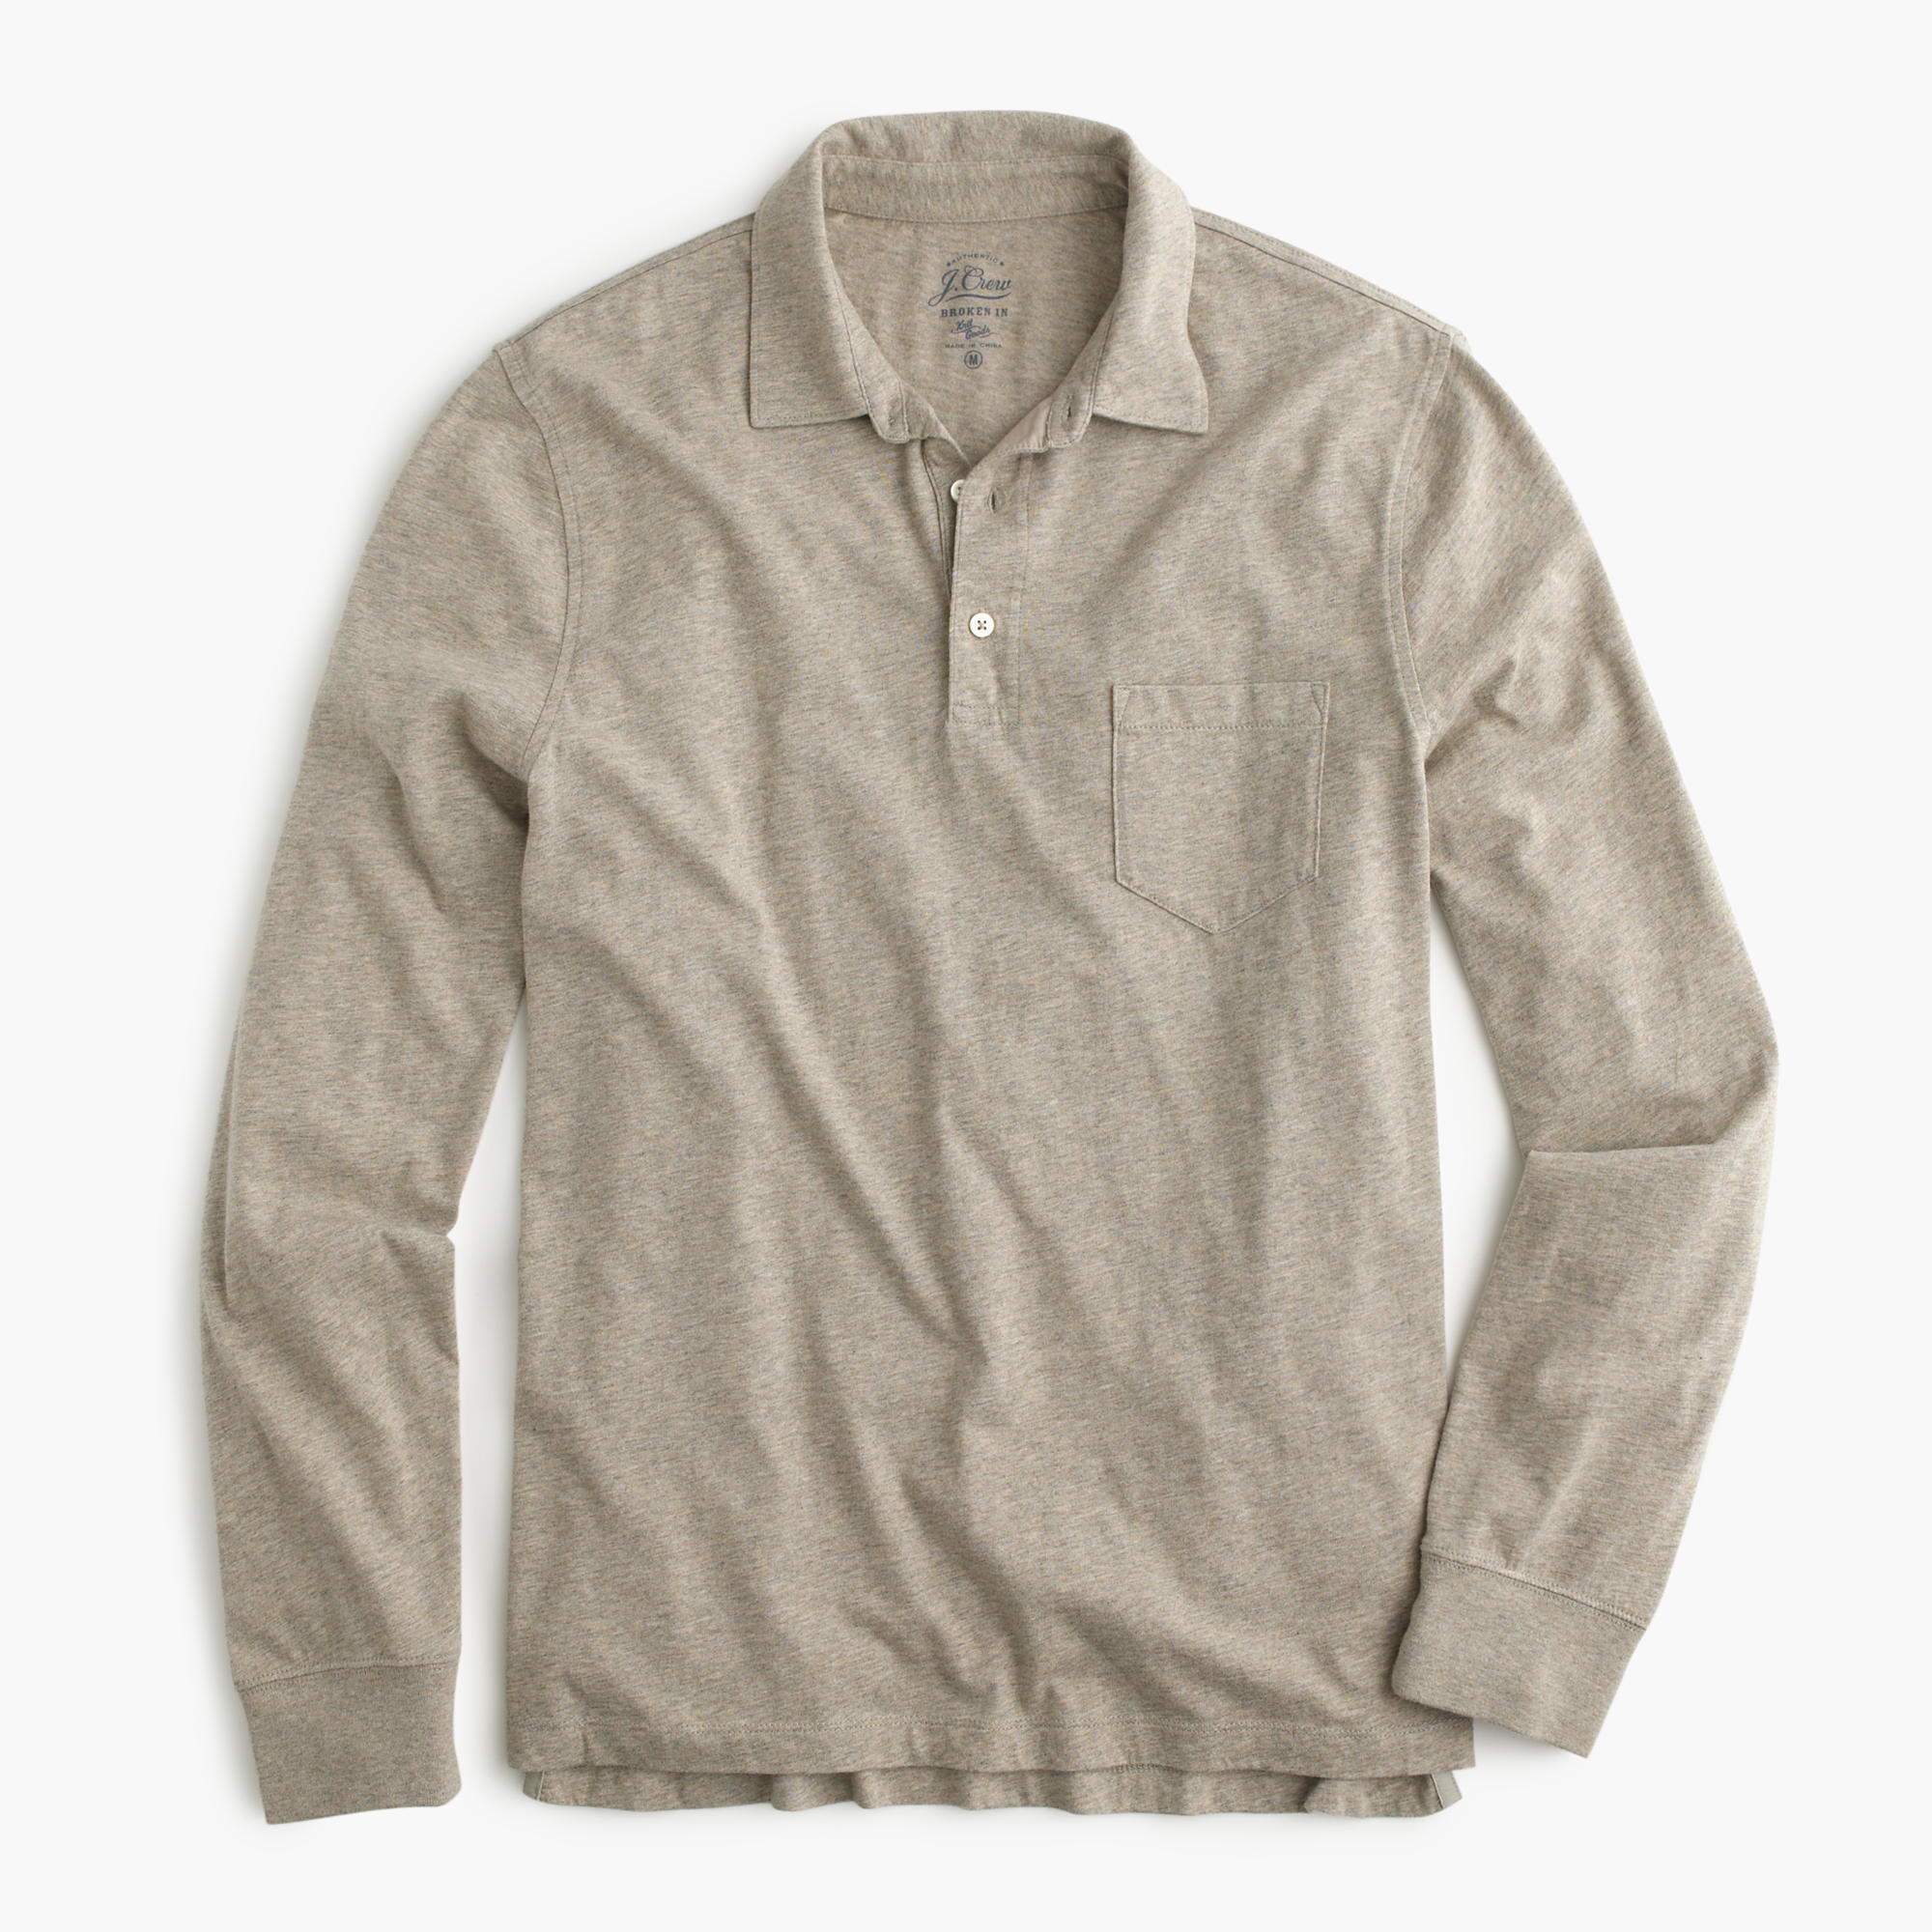 Lyst - J.Crew Broken-in Long-sleeve Pocket Polo Shirt in Natural for Men